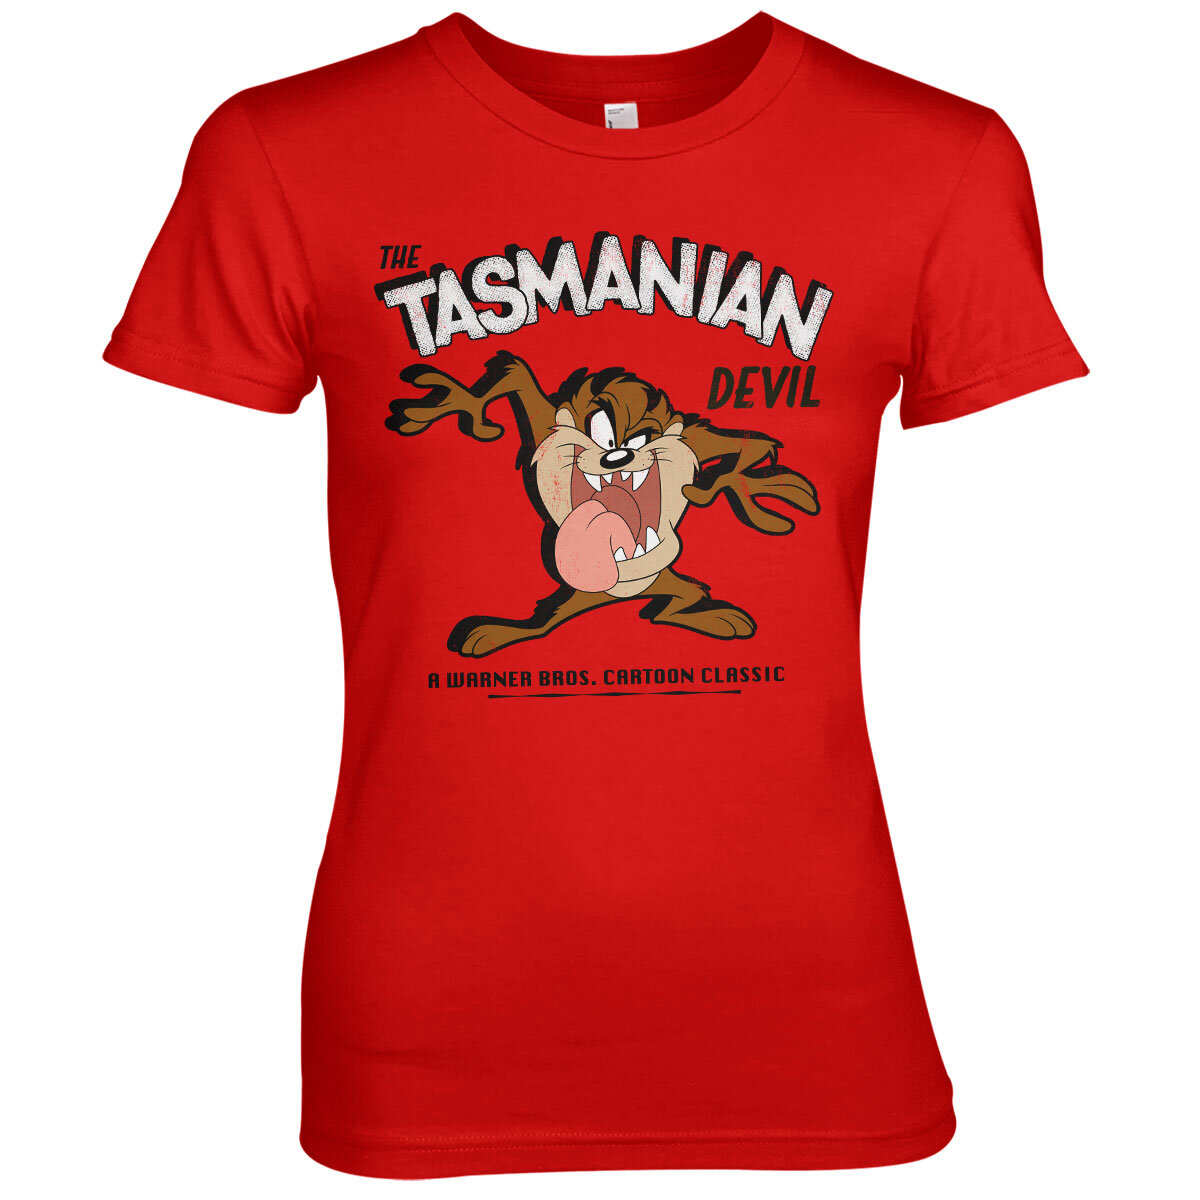 The Tasmanian Devil Girly Tee